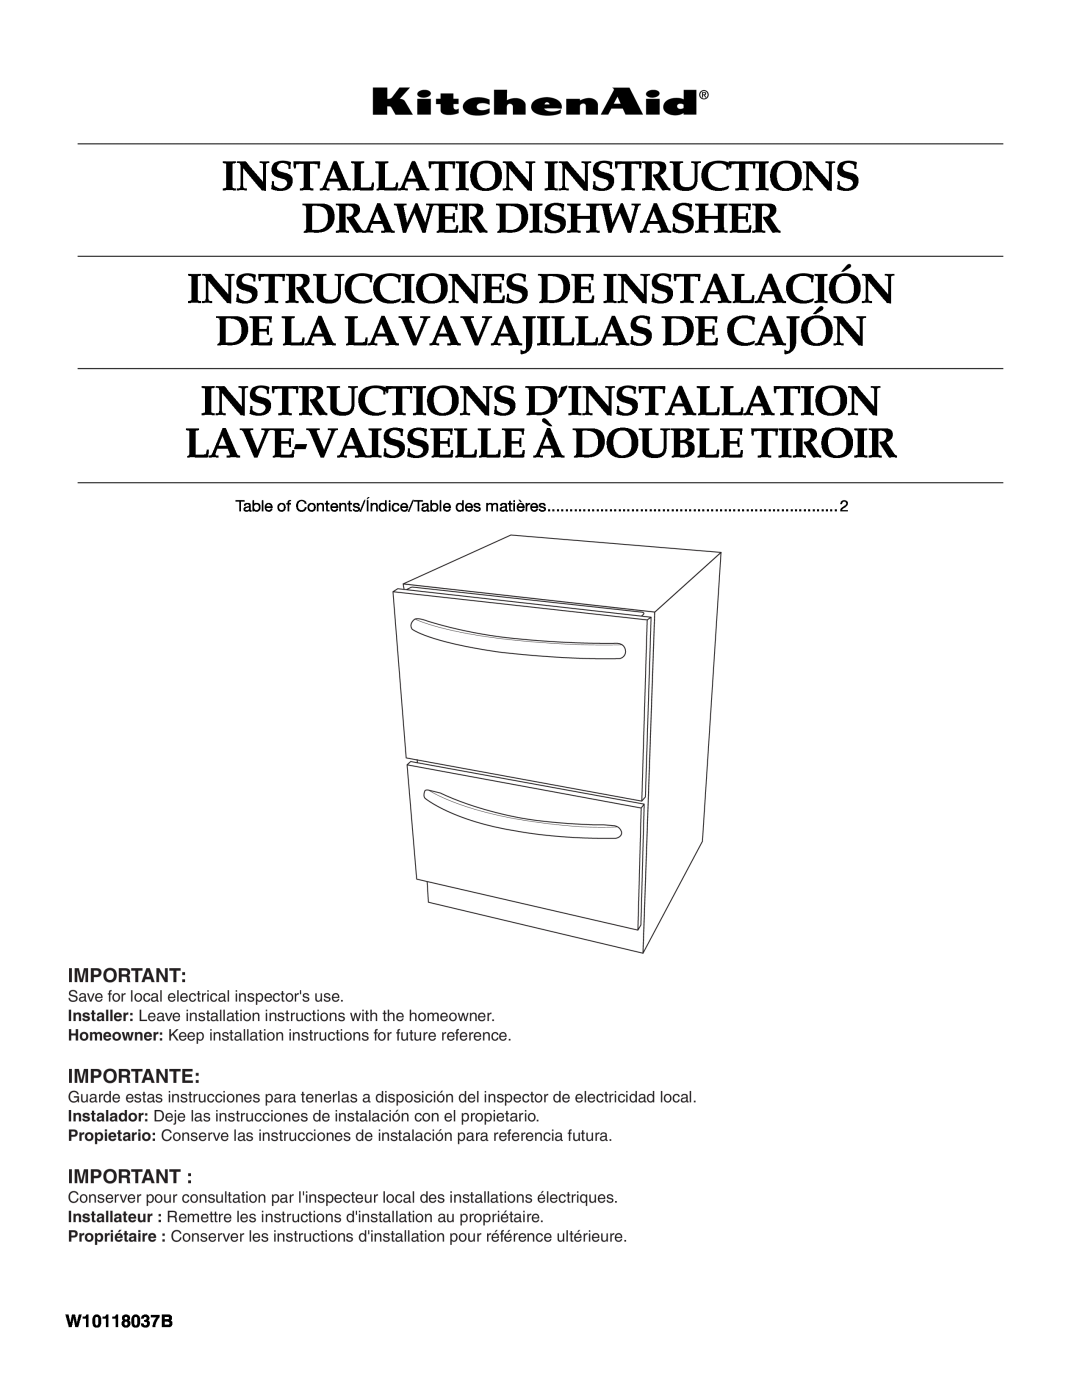 KitchenAid W10118037B installation instructions Installation Instructions Drawer Dishwasher, Importante 